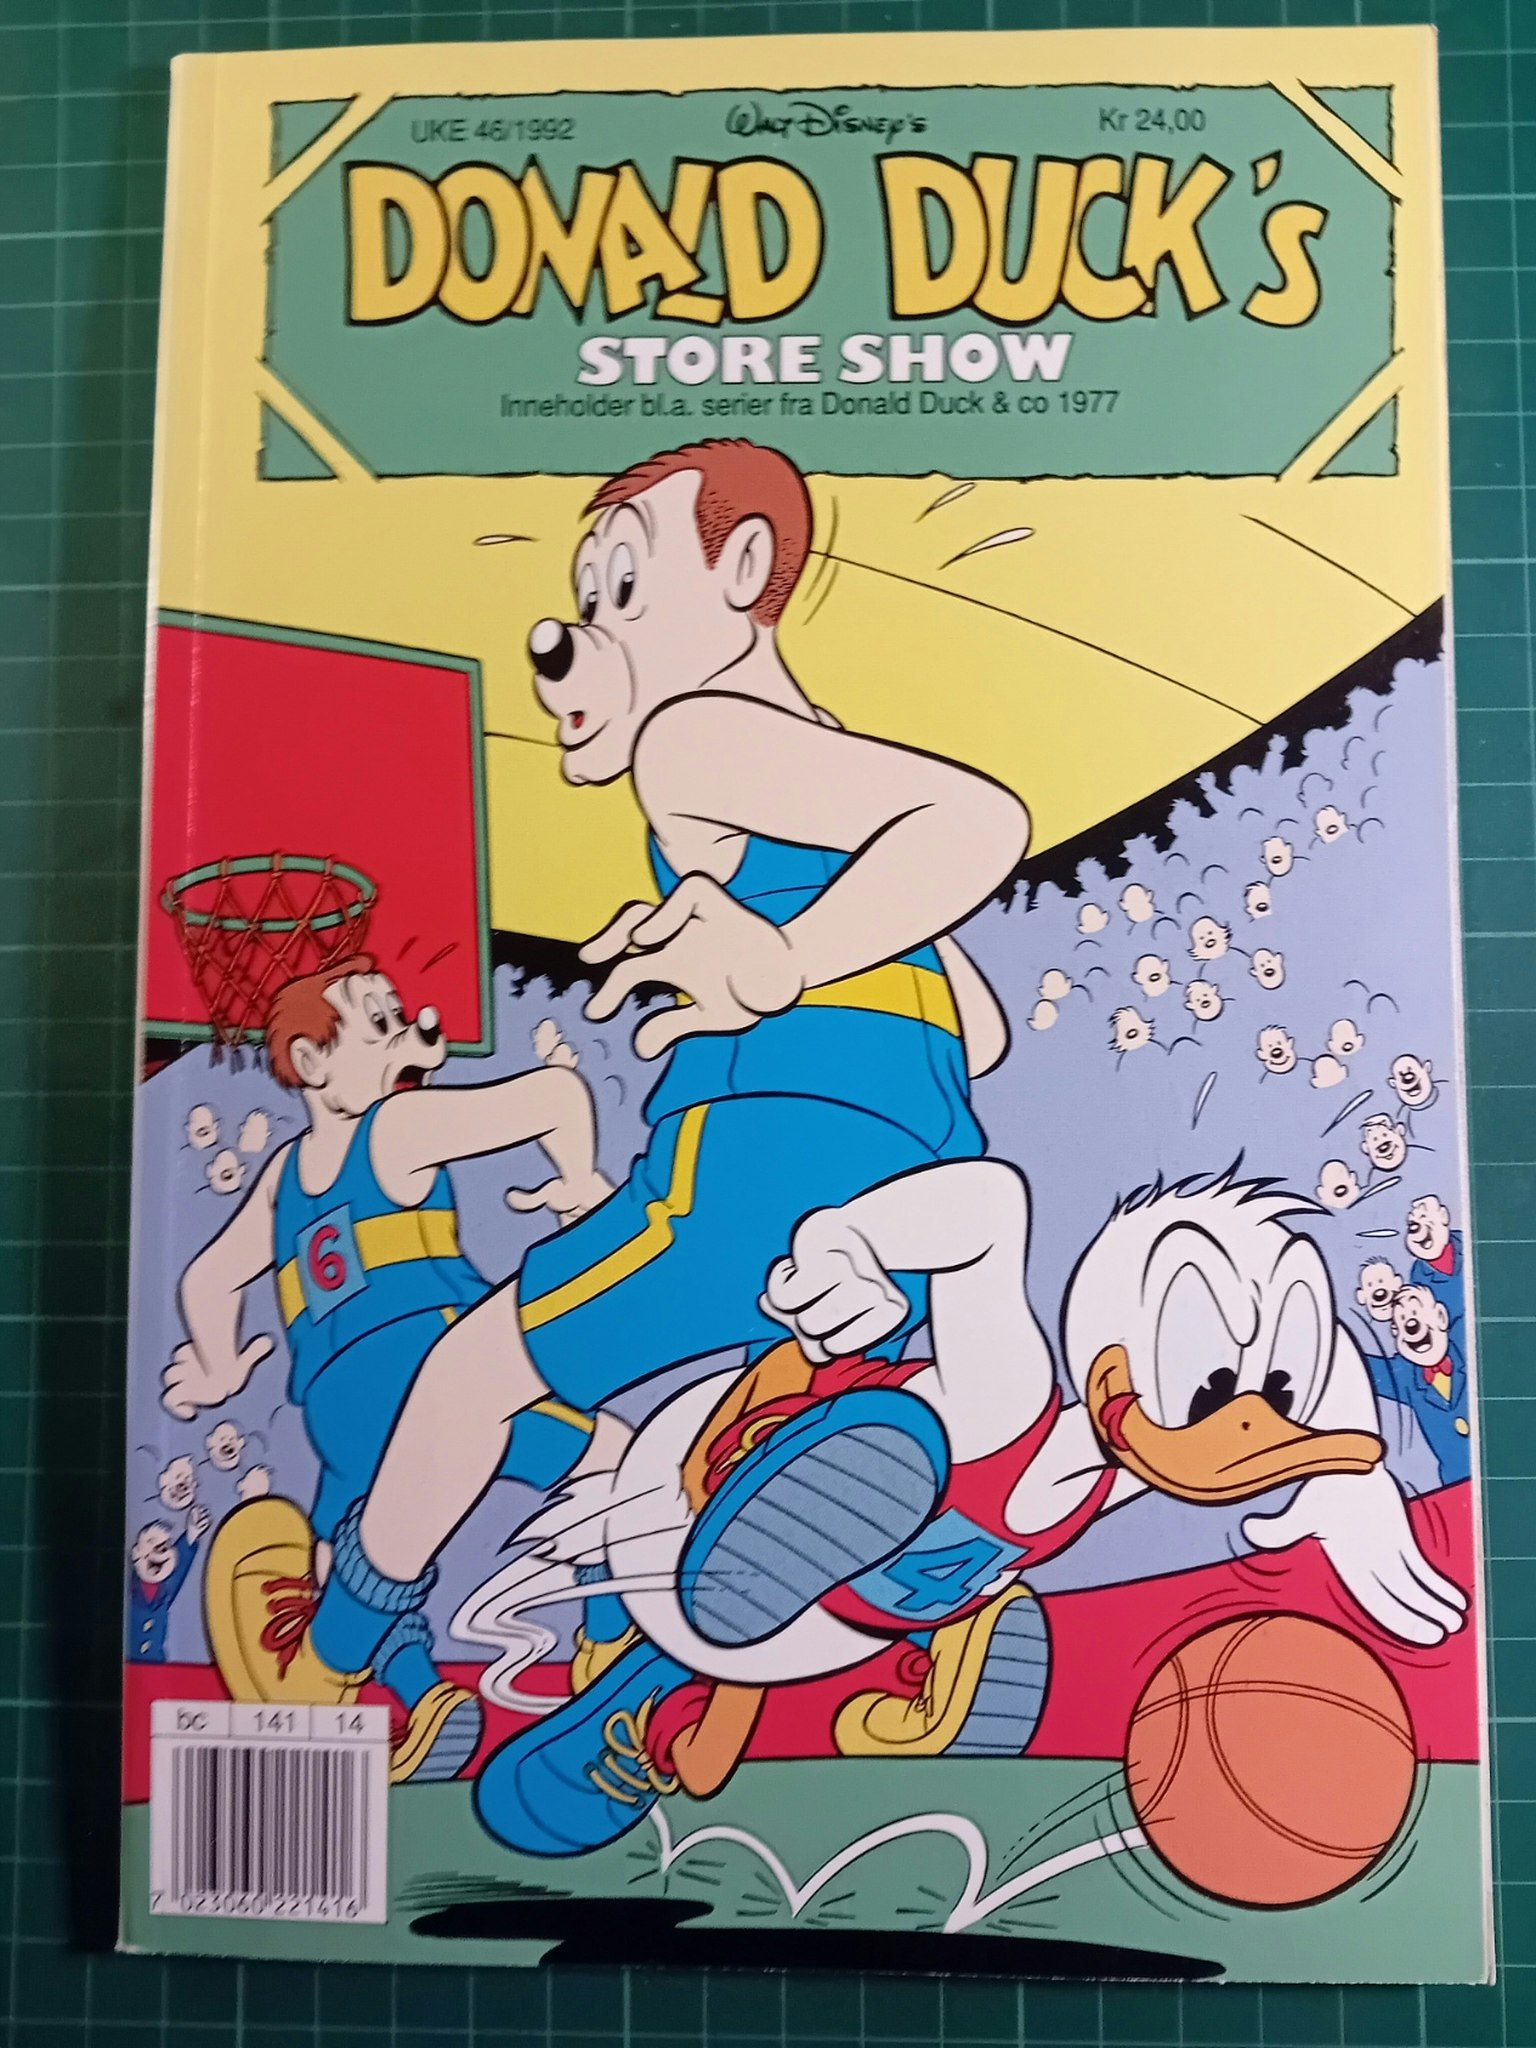 Donald Ducks 1992 Store show